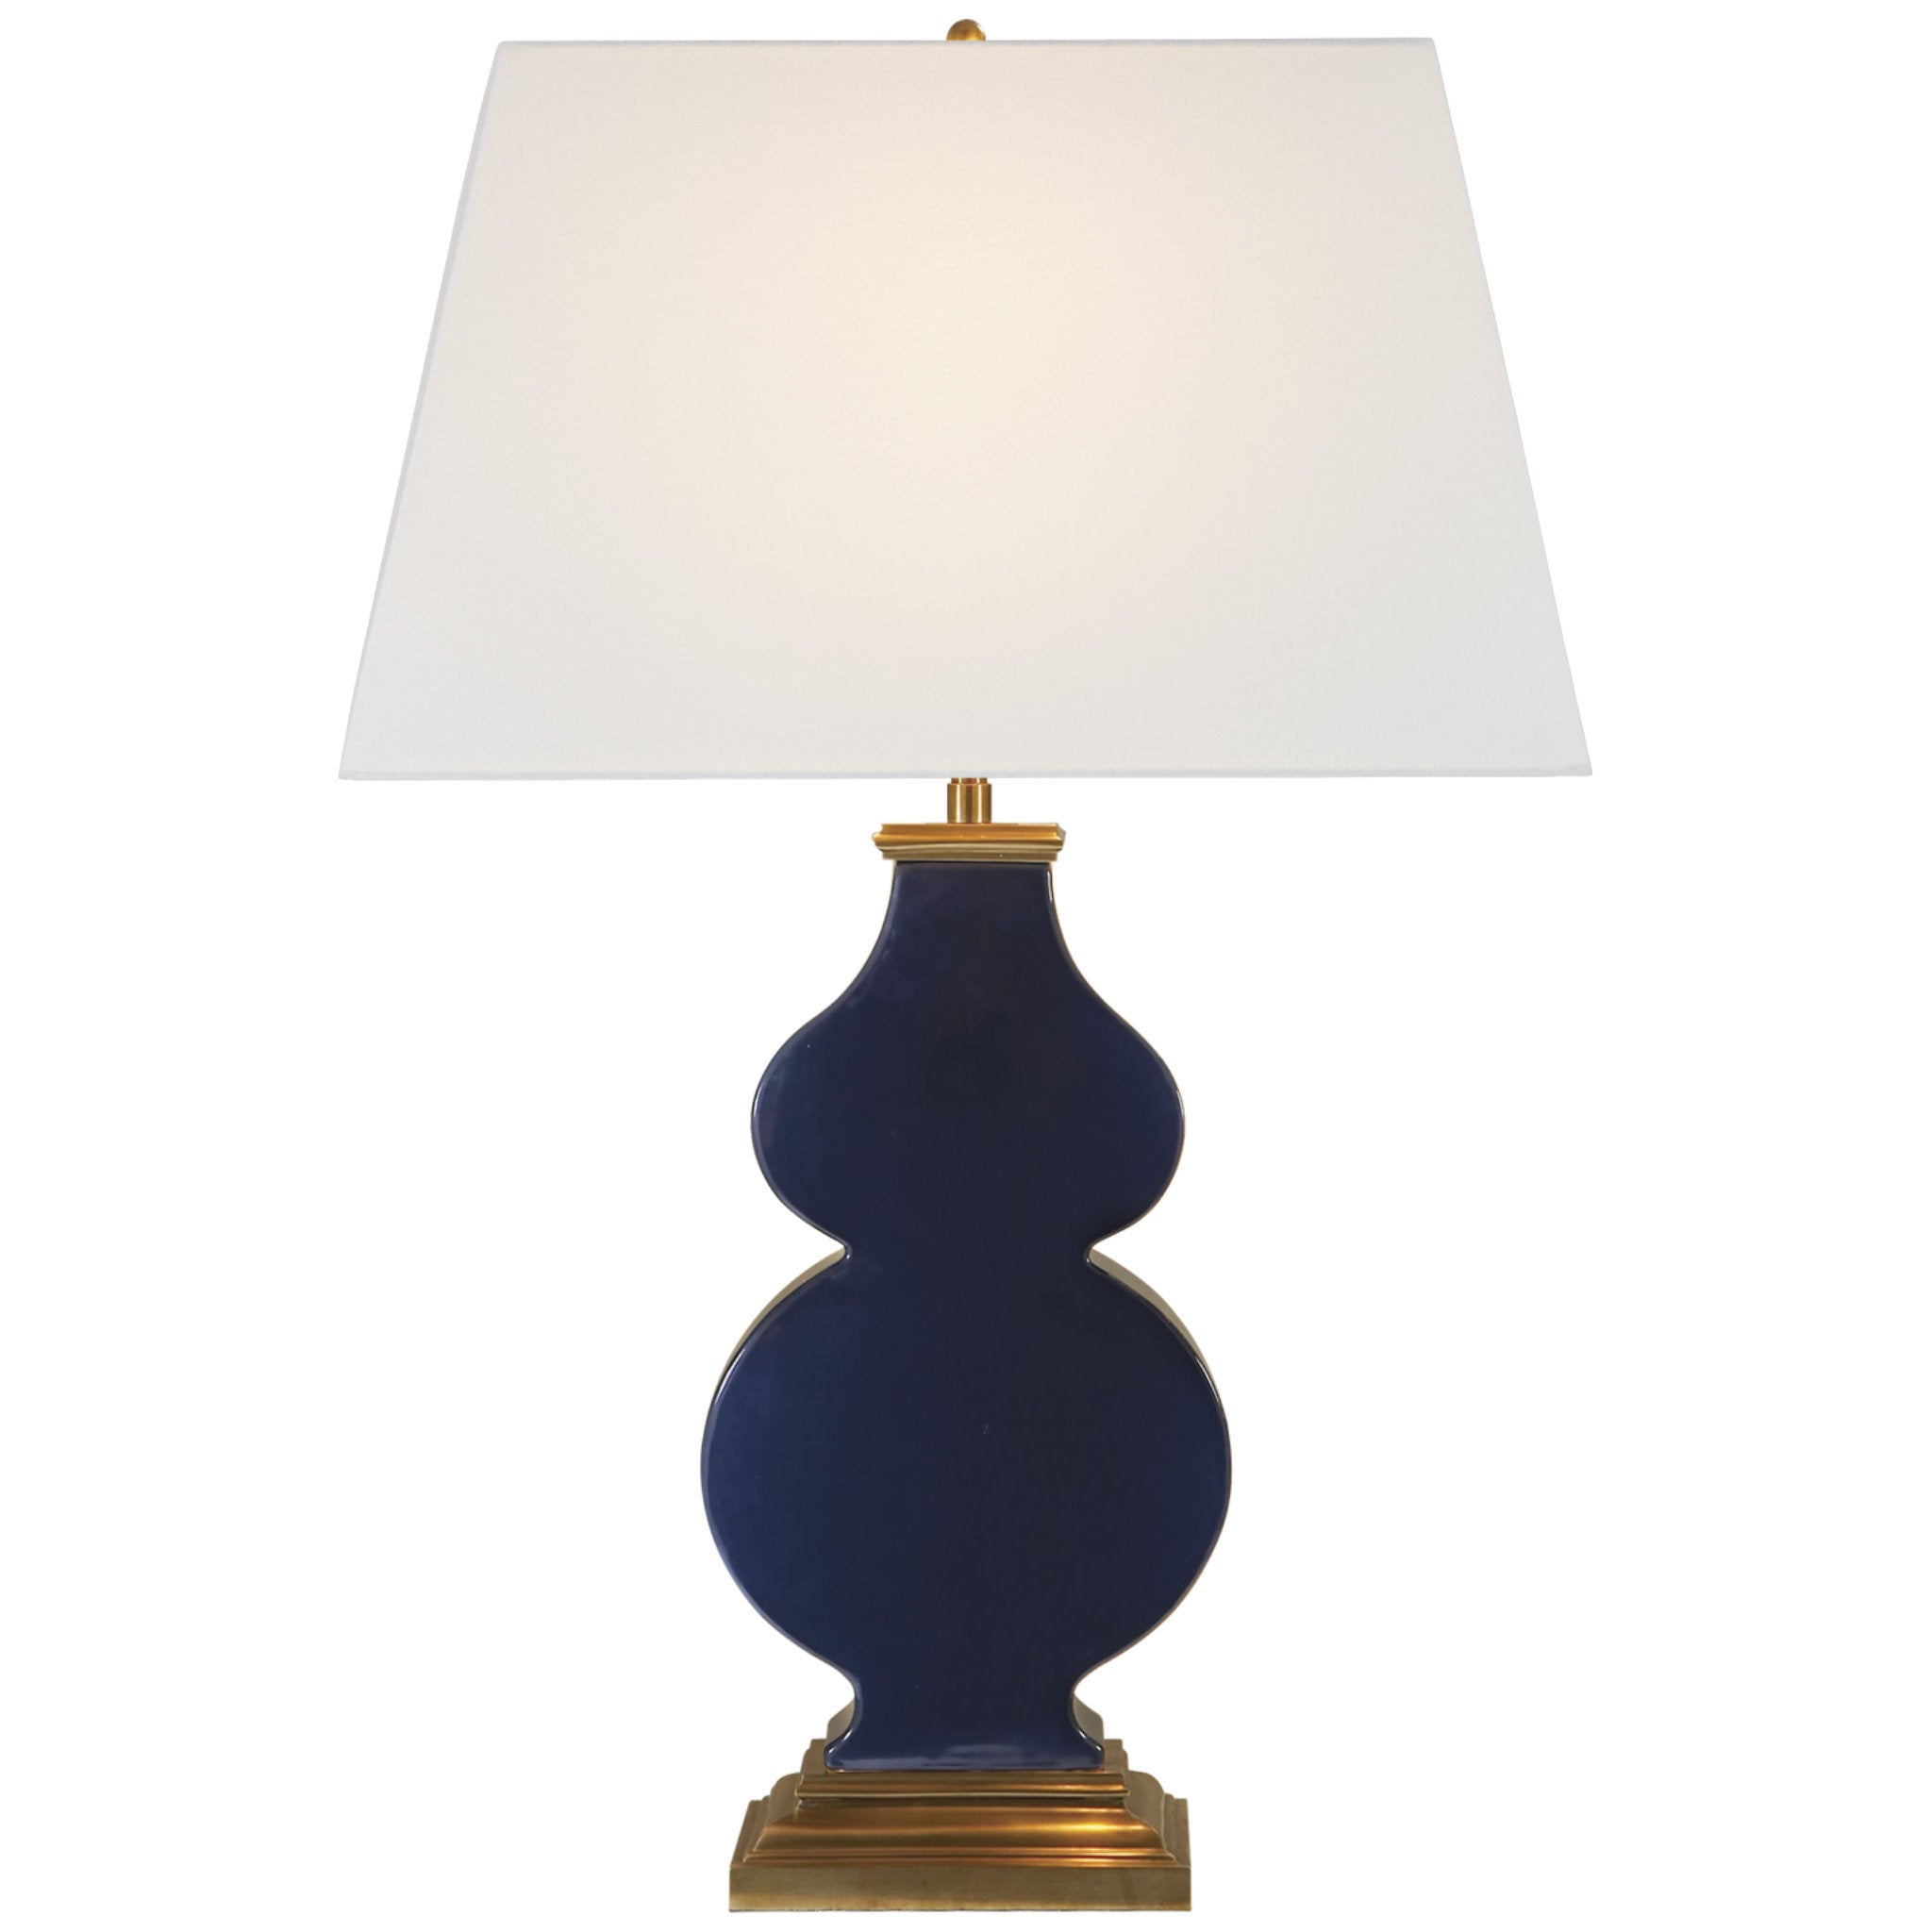 Alexa Hampton Anita Table Lamp in Midnight Blue Porcelain with Linen Shade